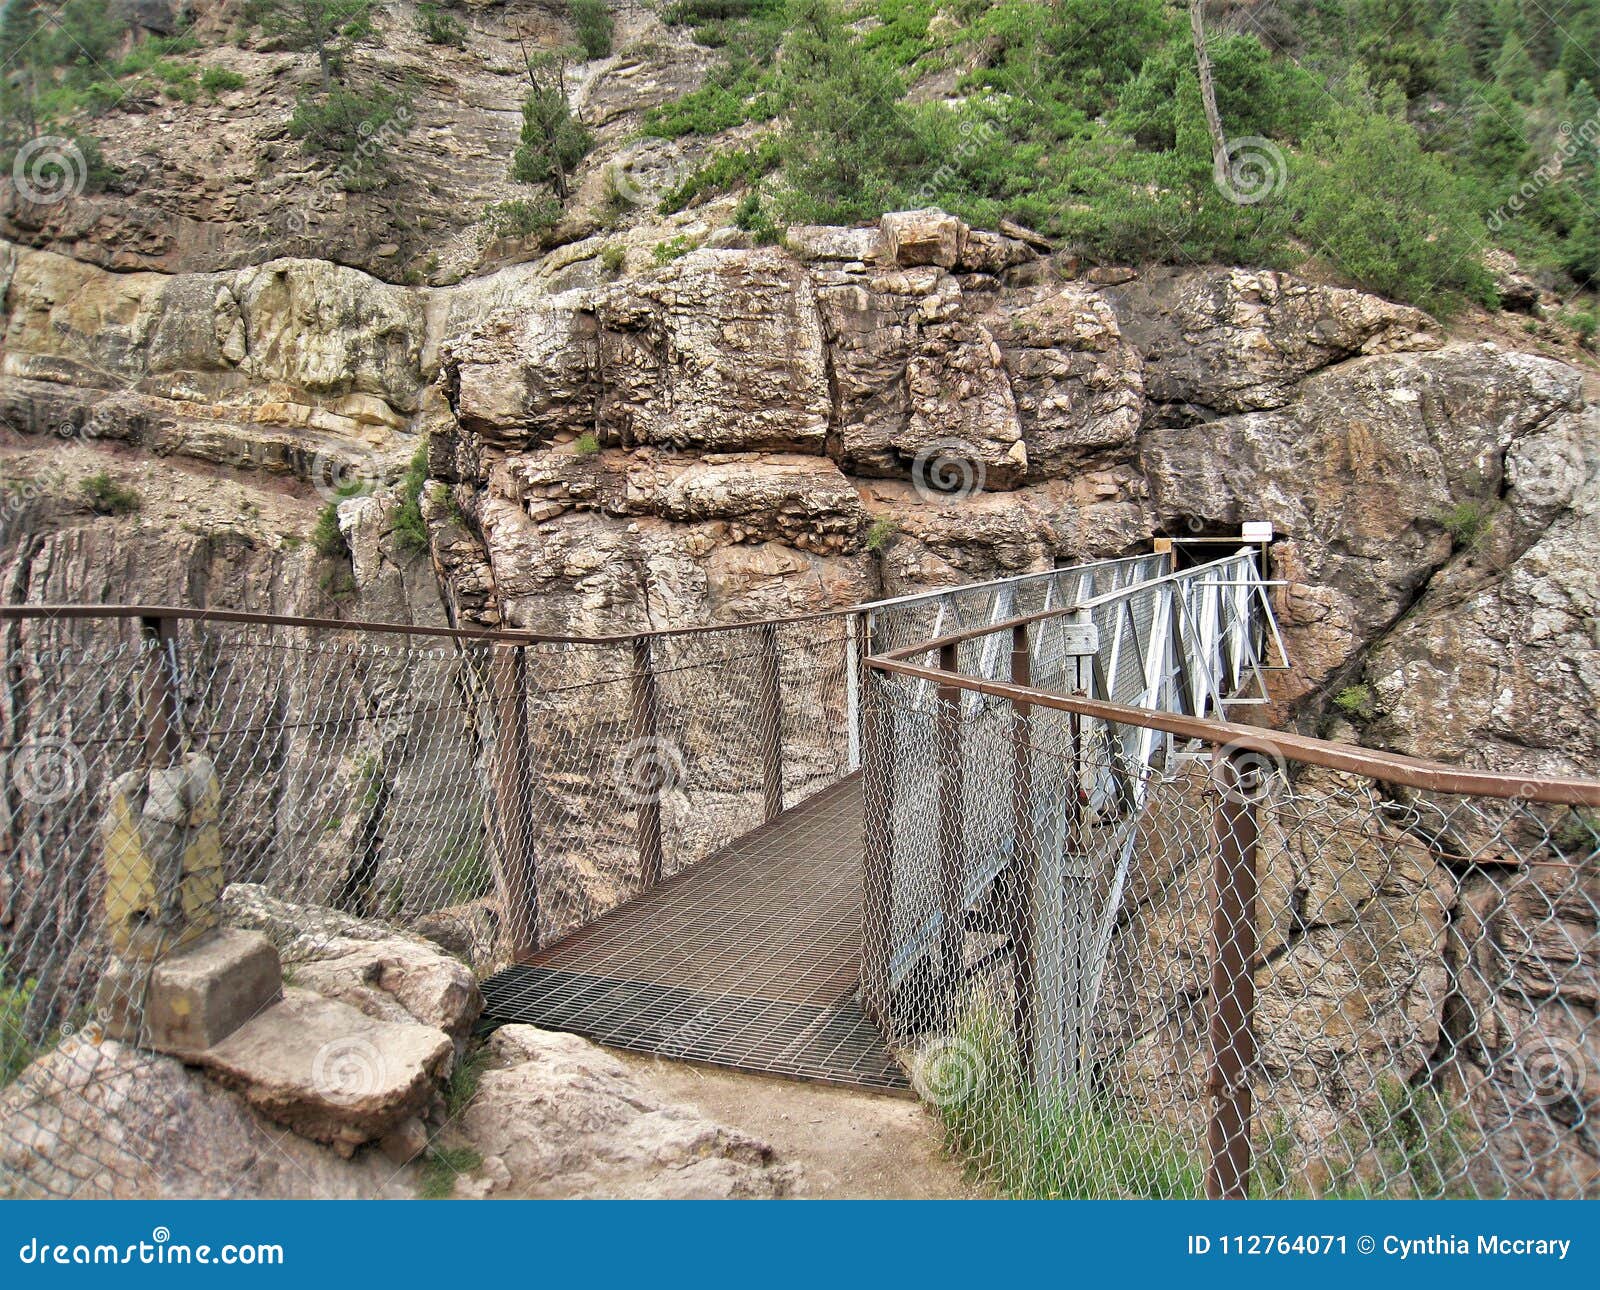 Bridge Aboe Box Canyon Falls In Ouray Colorado Stock Image Image Of Rock Walls 112764071